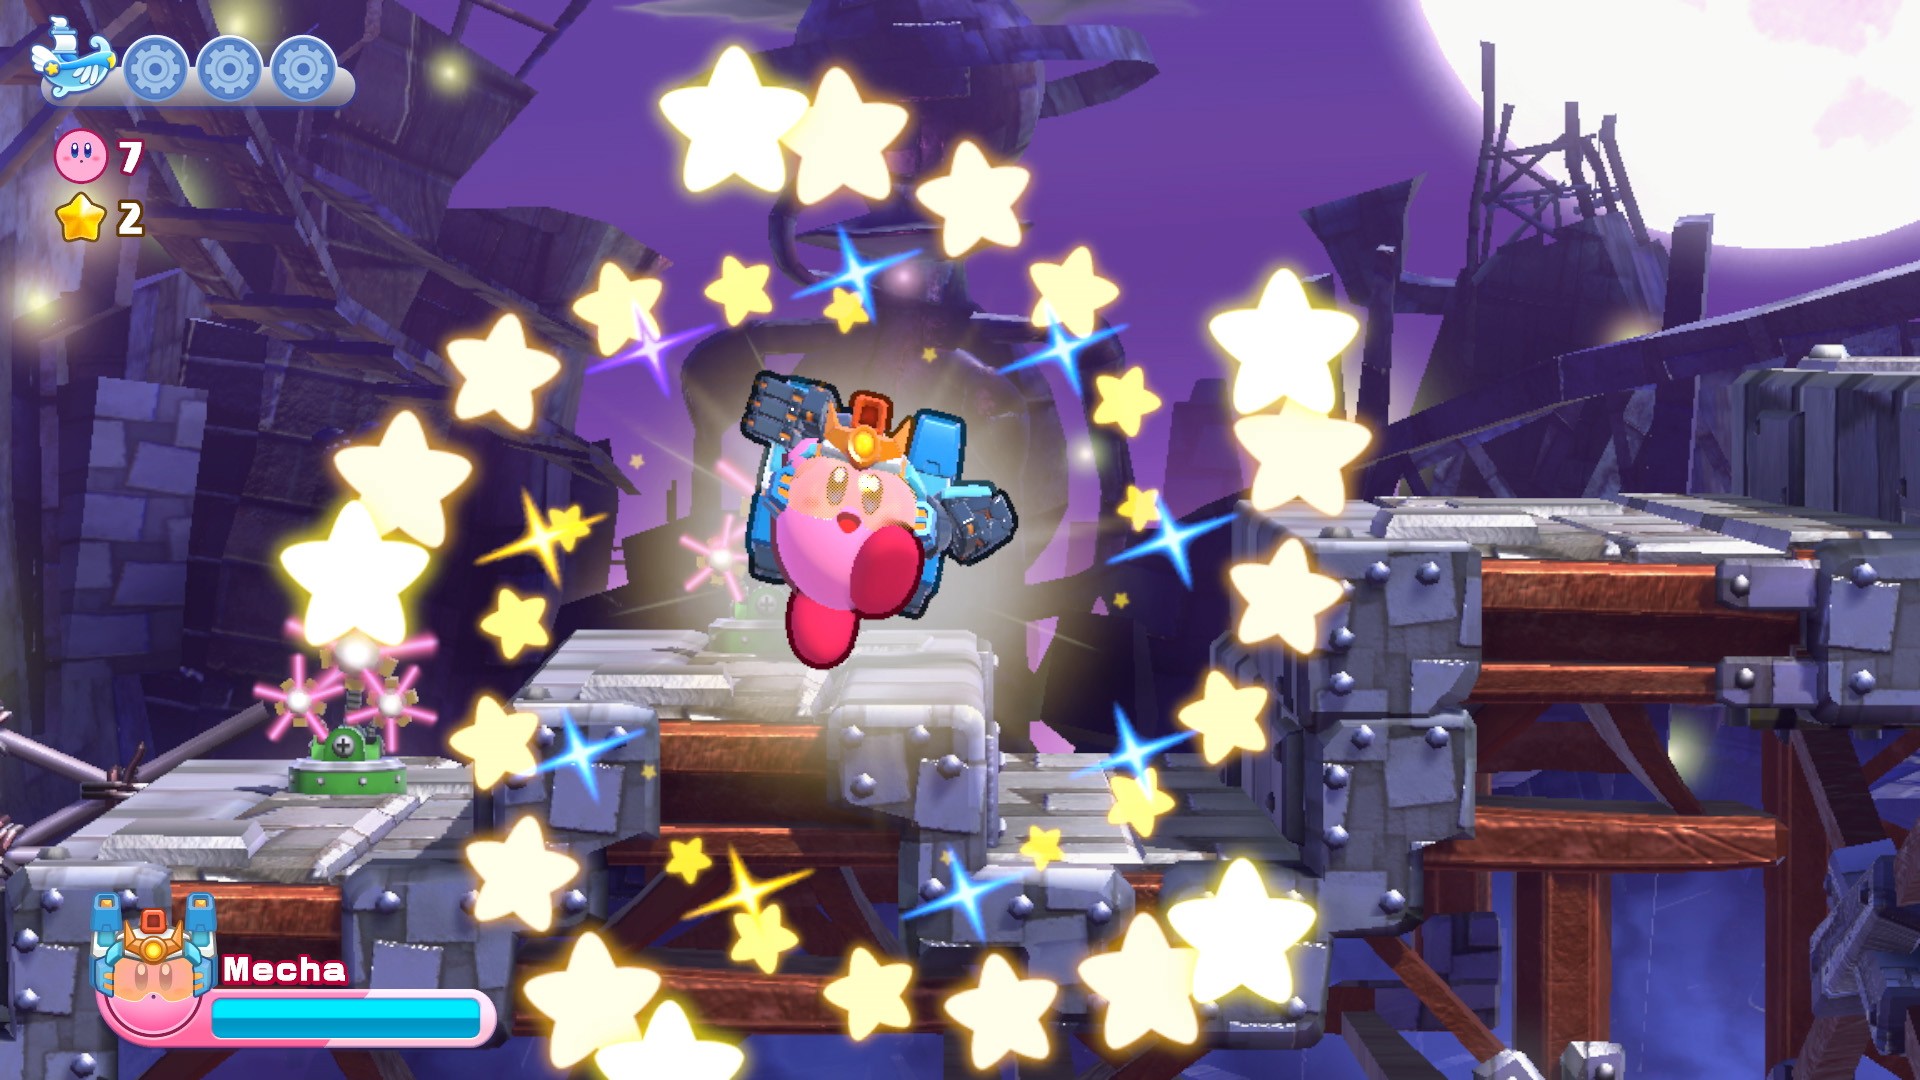 Pulsa aqui para ver la imagen a tamao completo
 ============== 
Kirbys Return to Dream Land Deluxe
